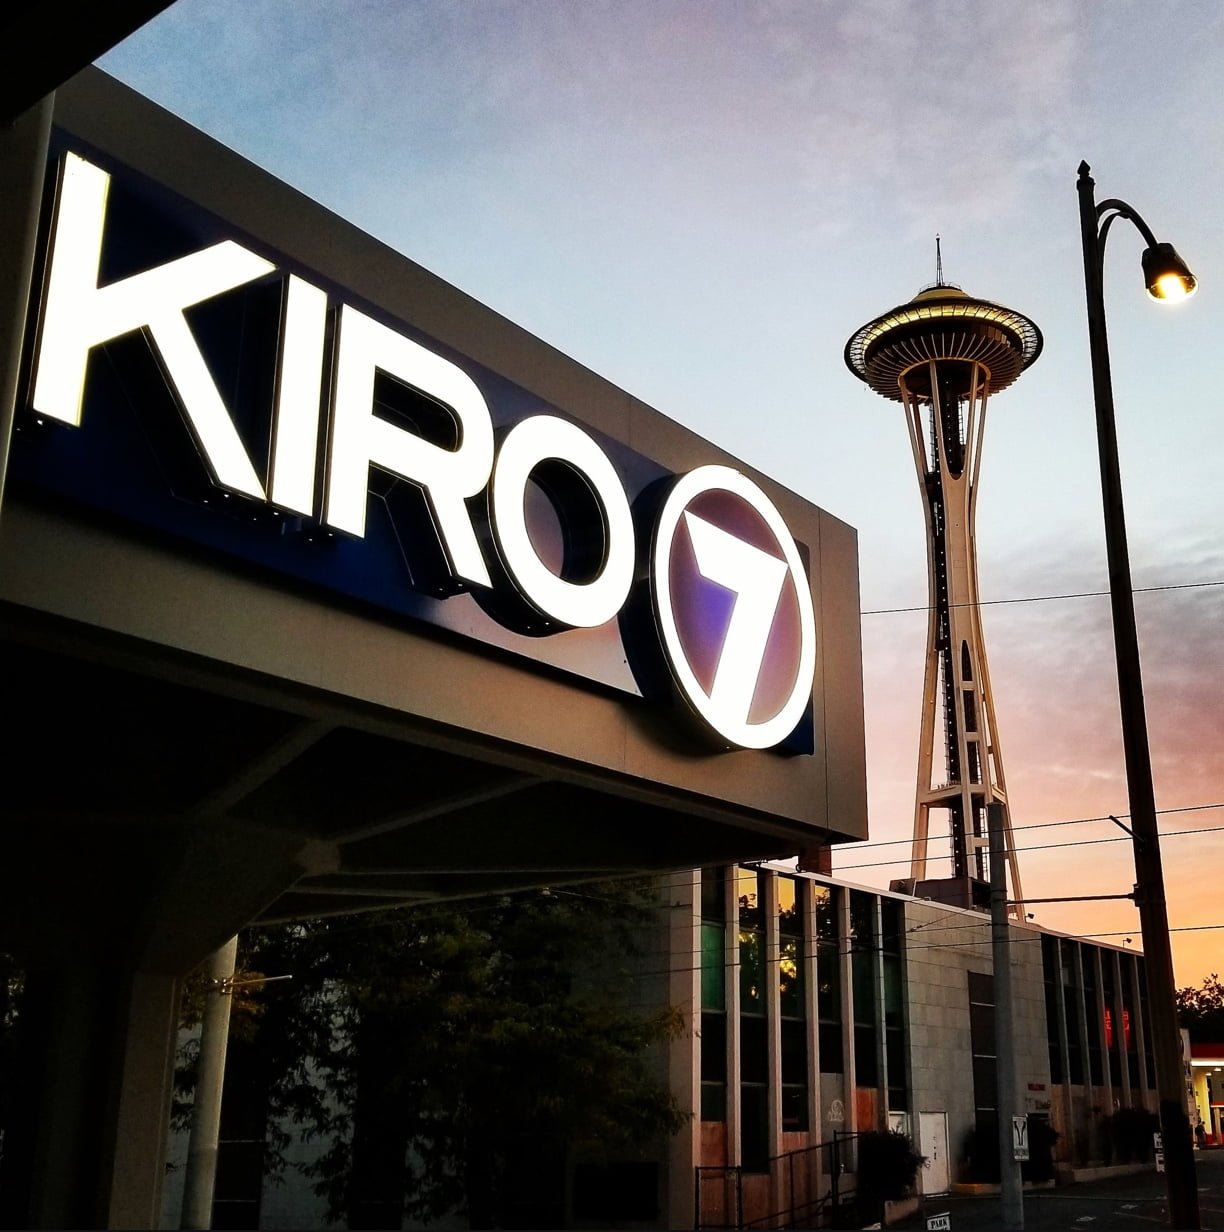 Rob Munoz departs KIRO7 News QZVX Broadcast History & Current Affairs